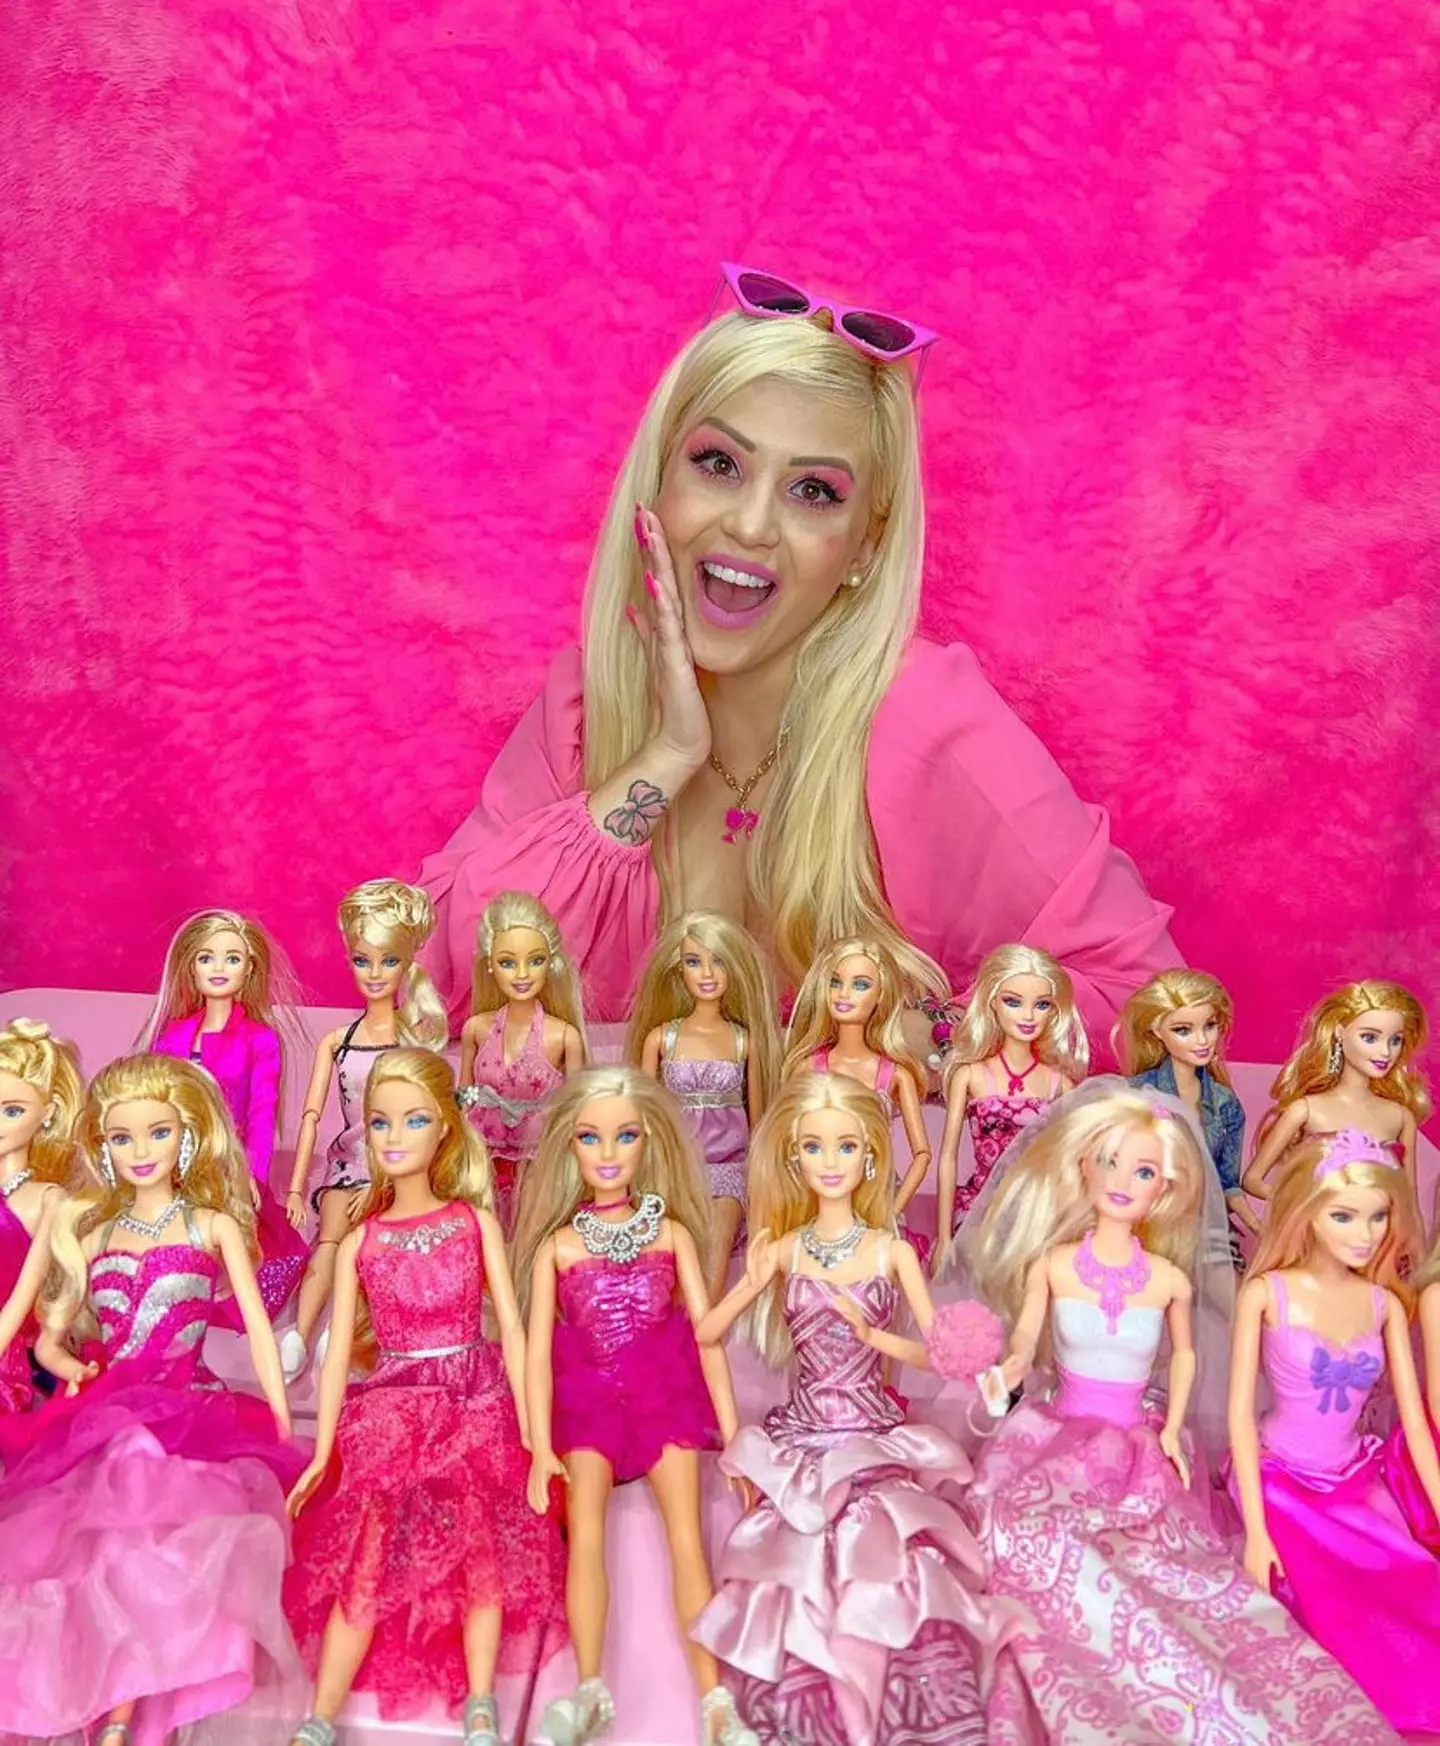 Bruna with her Barbie dolls.